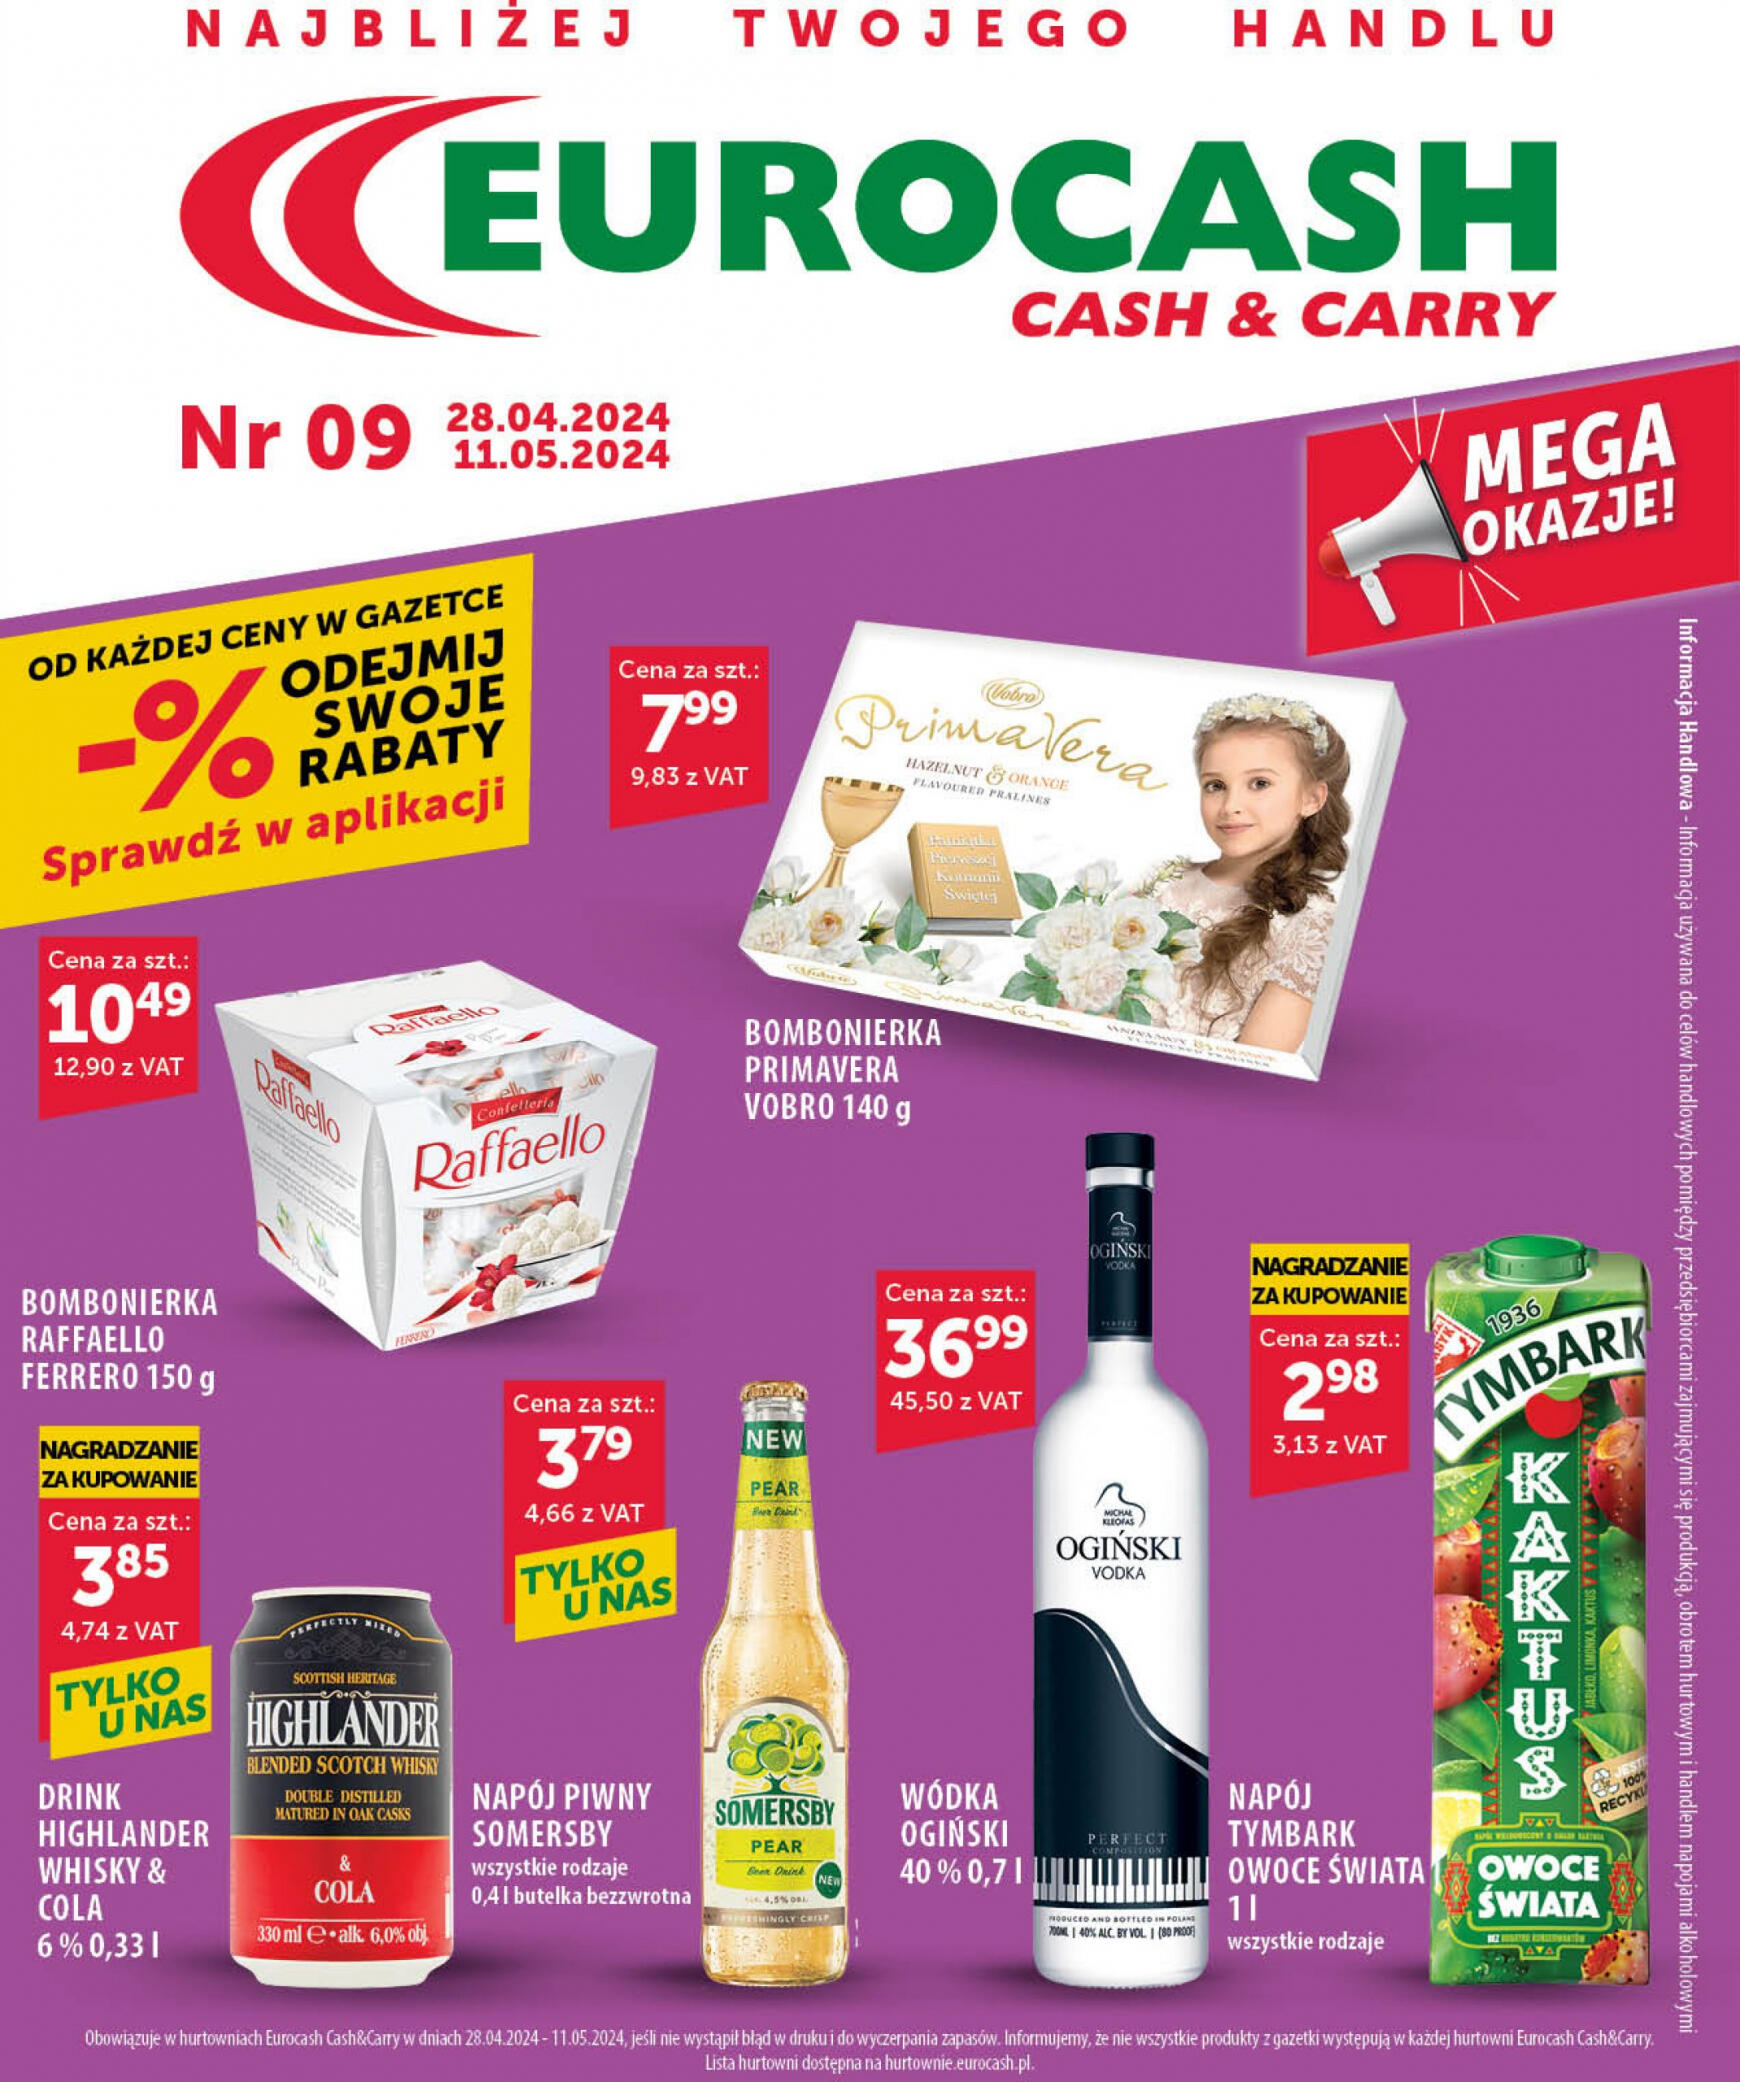 eurocash - Eurocash - Gazetka Cash&Carry gazetka aktualna ważna od 28.04. - 11.05.